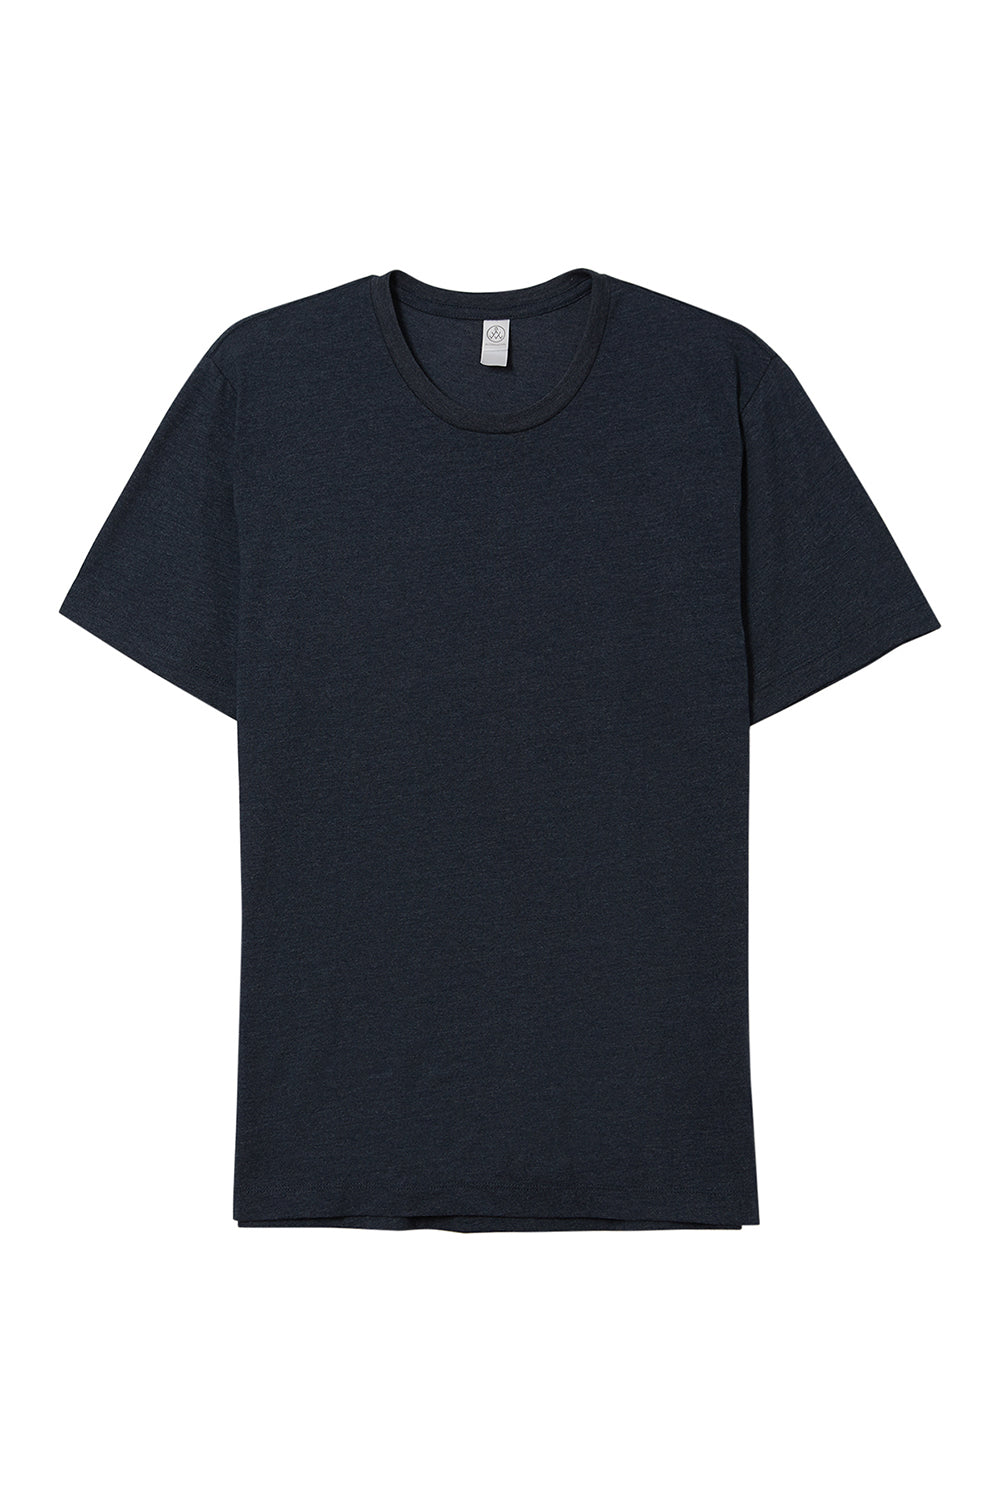 Alternative AA1070/1070 Mens Go To Jersey Short Sleeve Crewneck T-Shirt Heather Midnight Navy Blue Flat Front